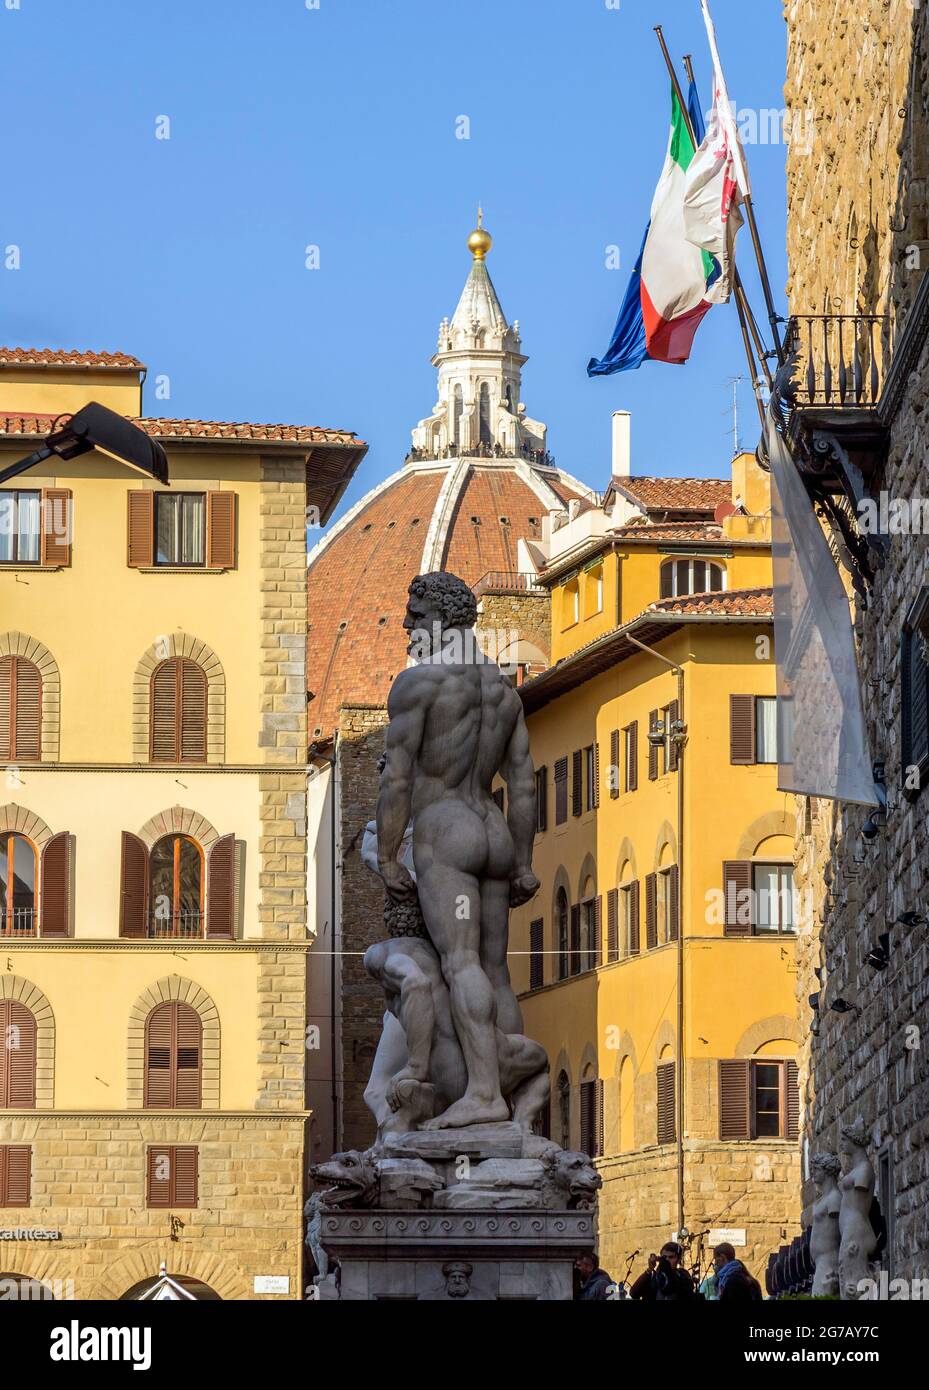 Italie, Florence, Hercules tuant Cacus, groupe de marbre sur la Piazza della Signoria, sculpture de Baccio Bandinelli Banque D'Images